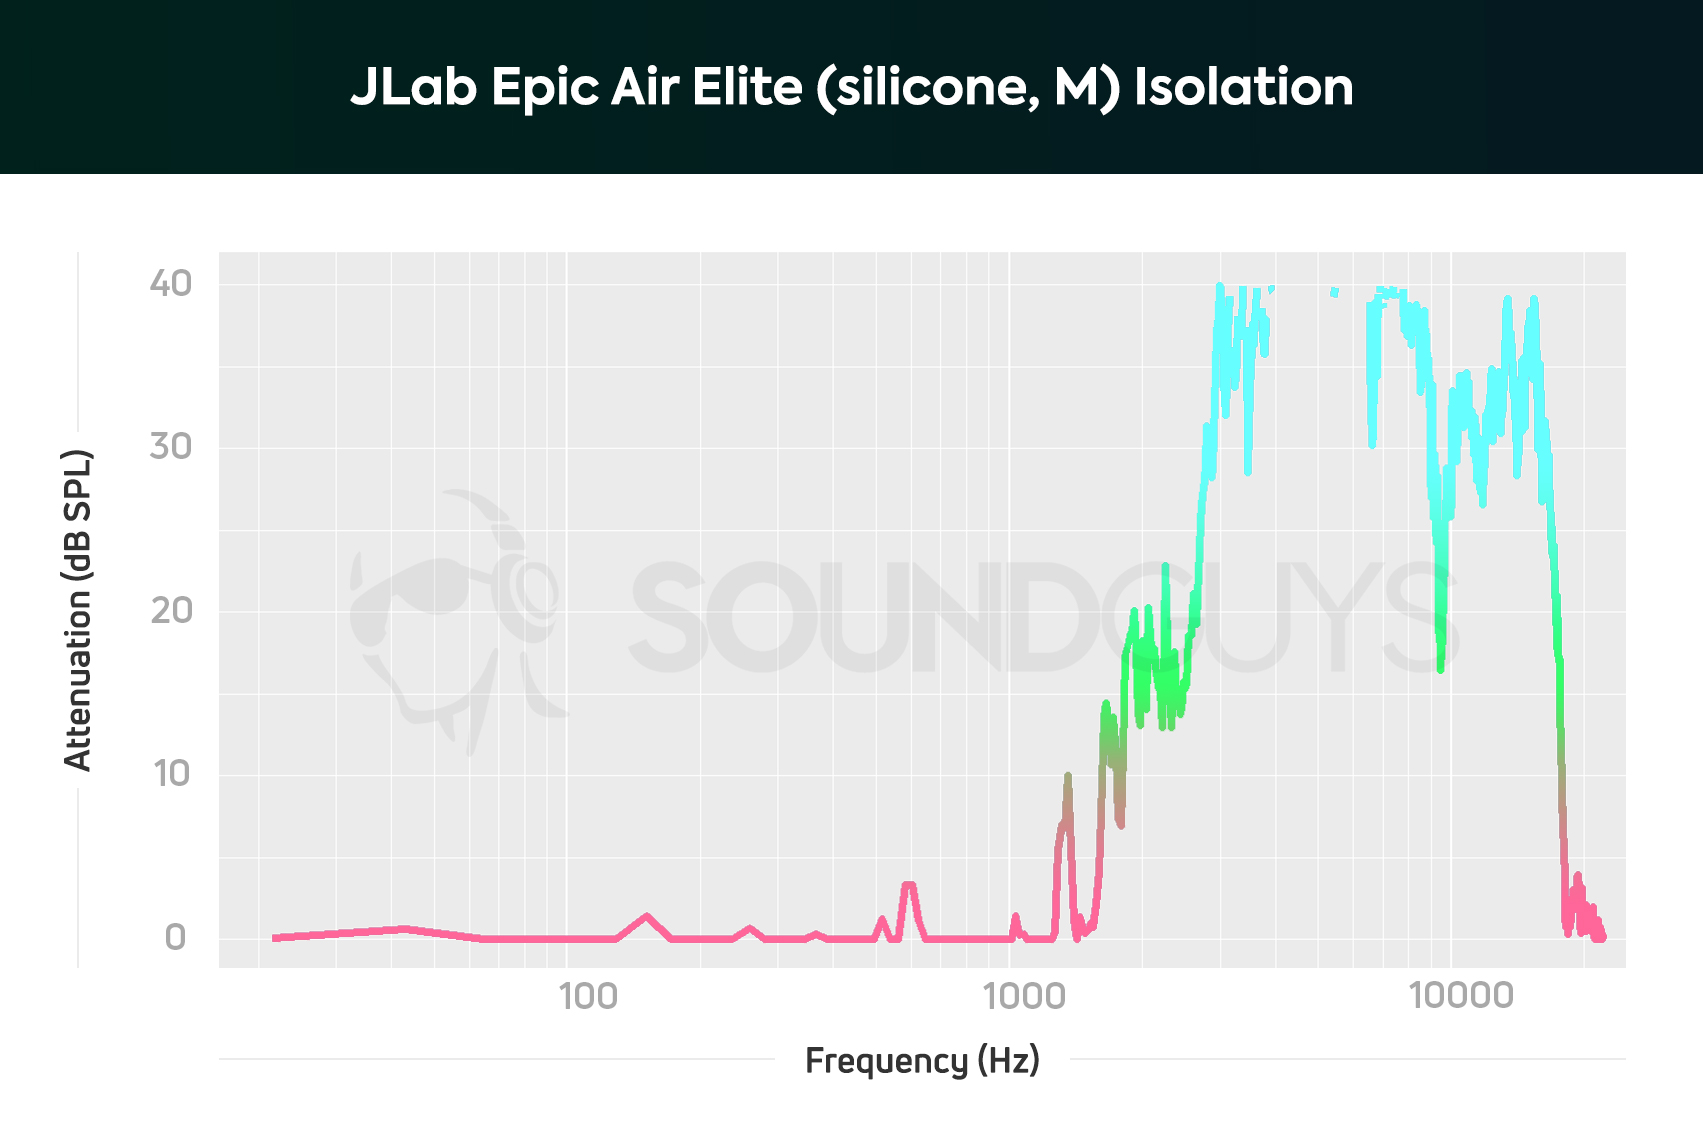 JLab Epic Air Elite isolation chart.